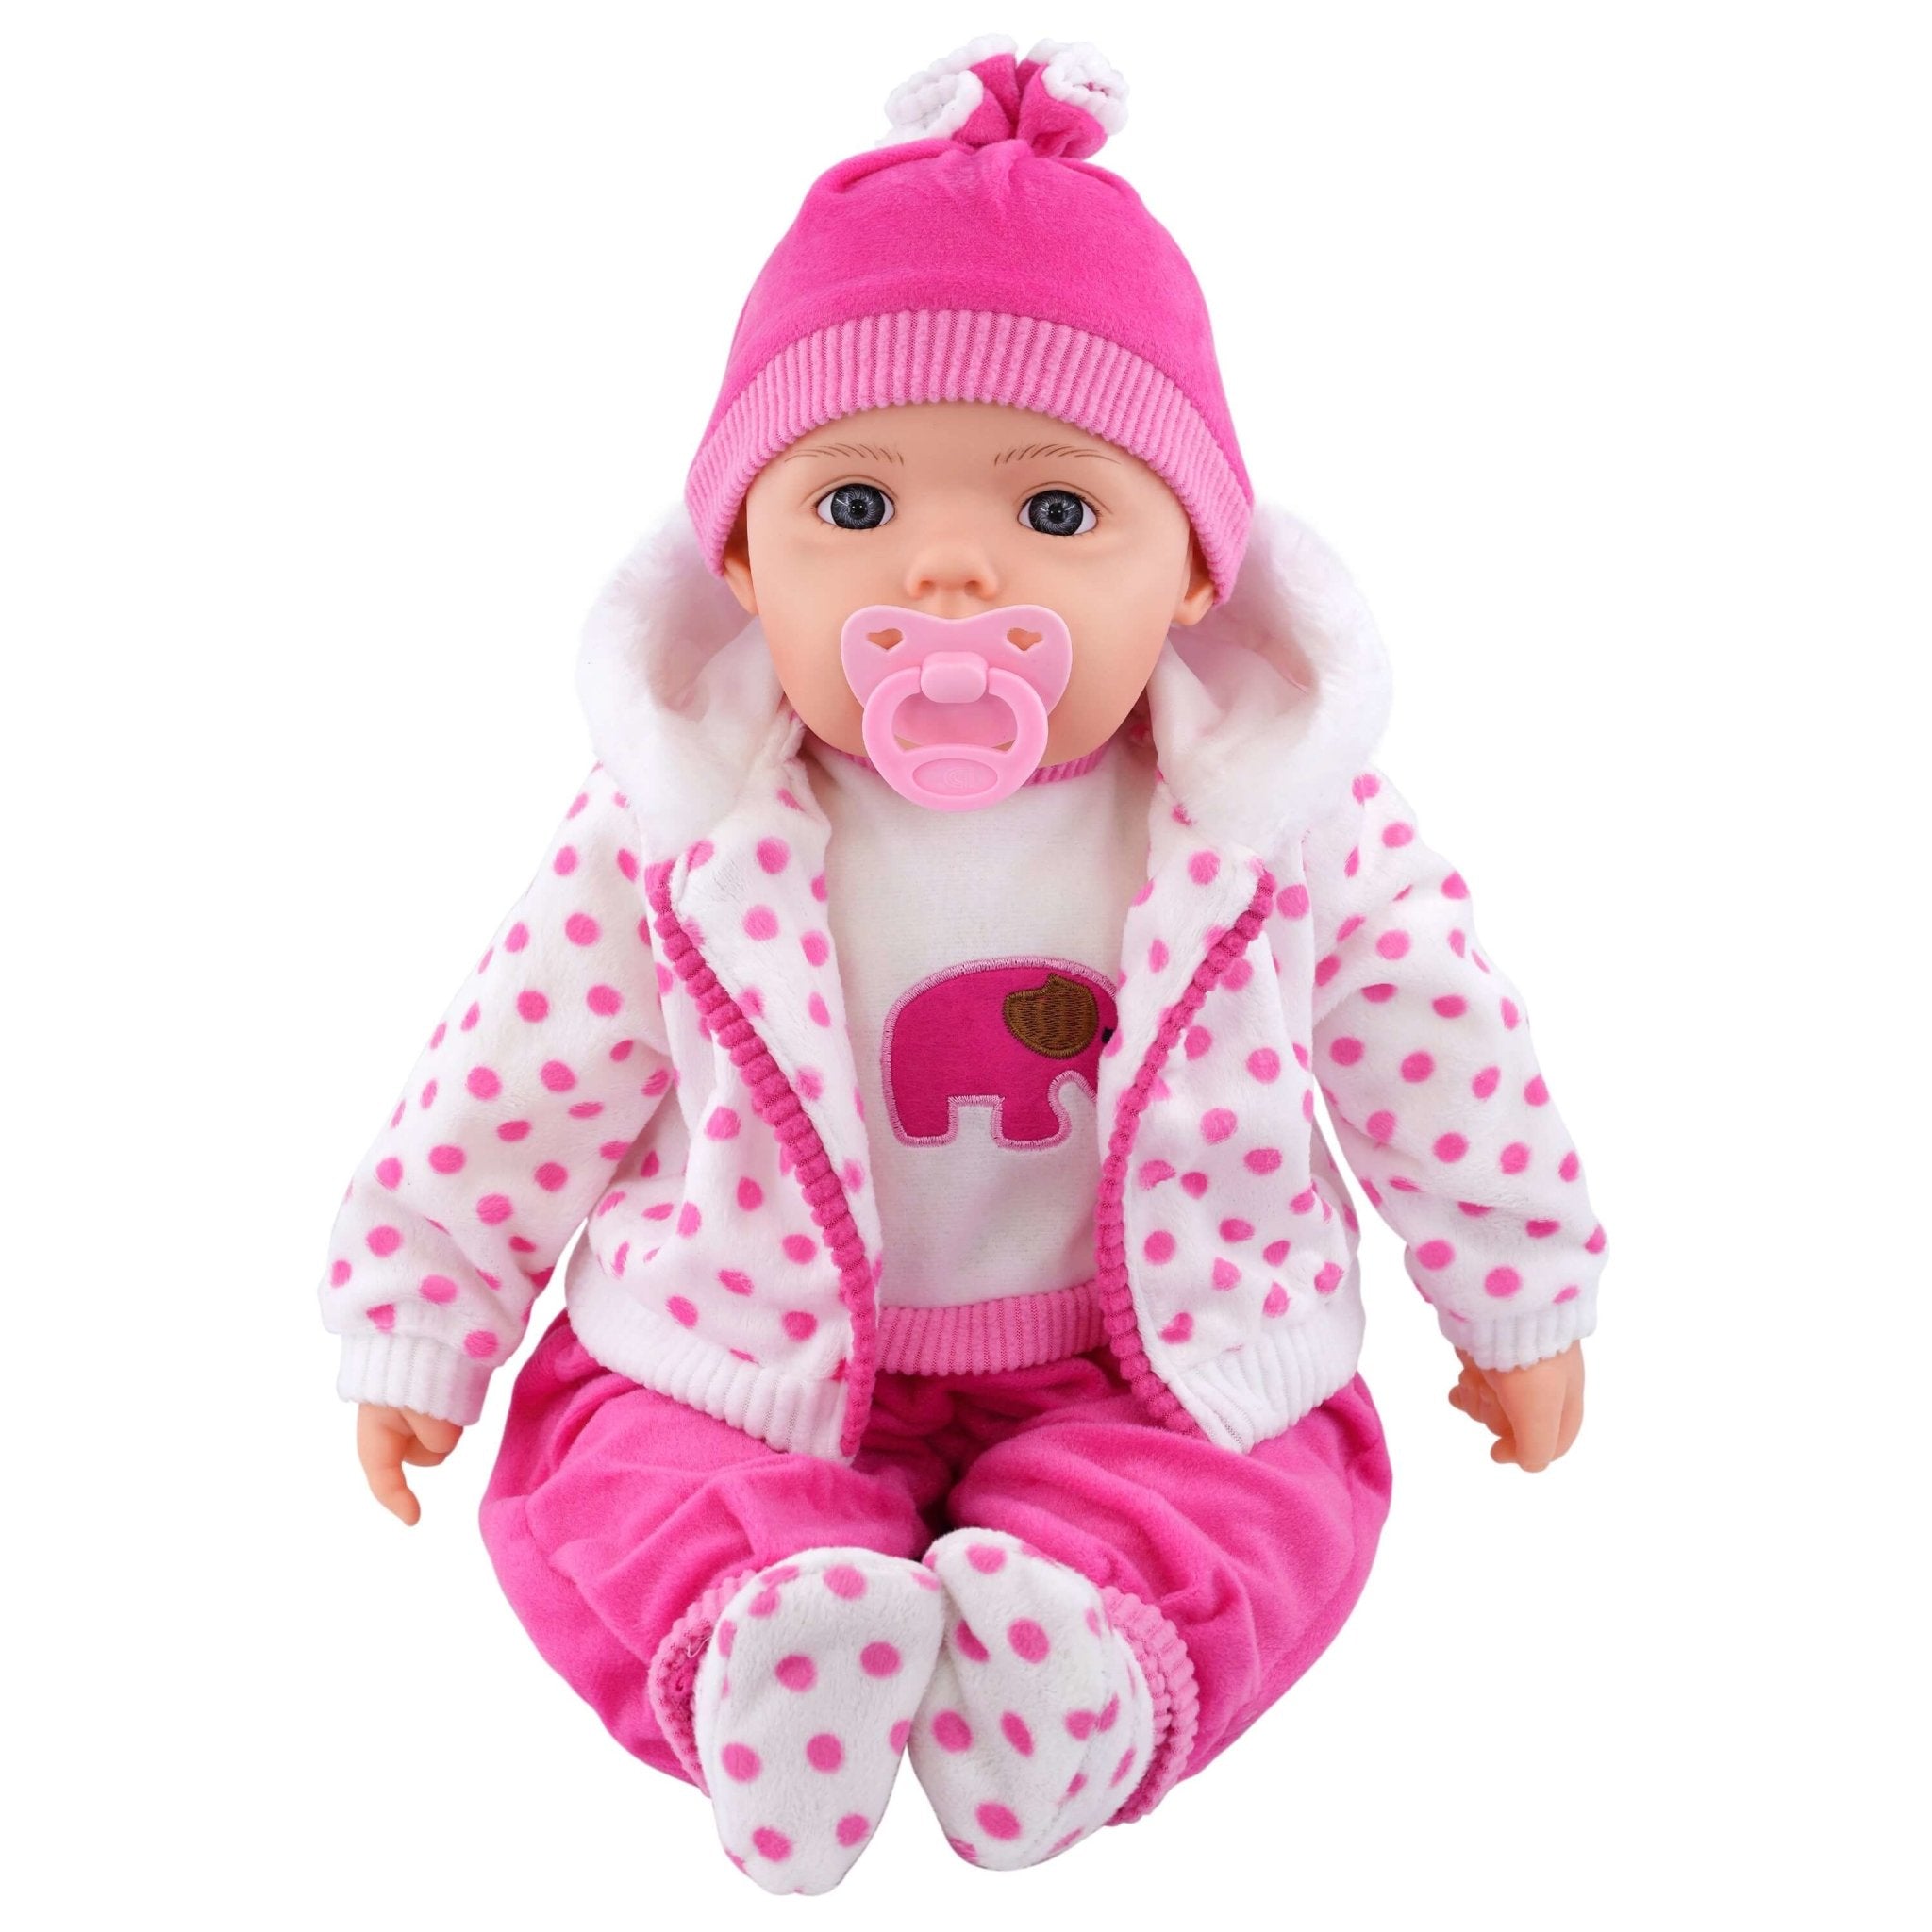 Spotty Coat Bibi Baby Doll Toy With Dummy & Sounds BiBi Doll - The Magic Toy Shop